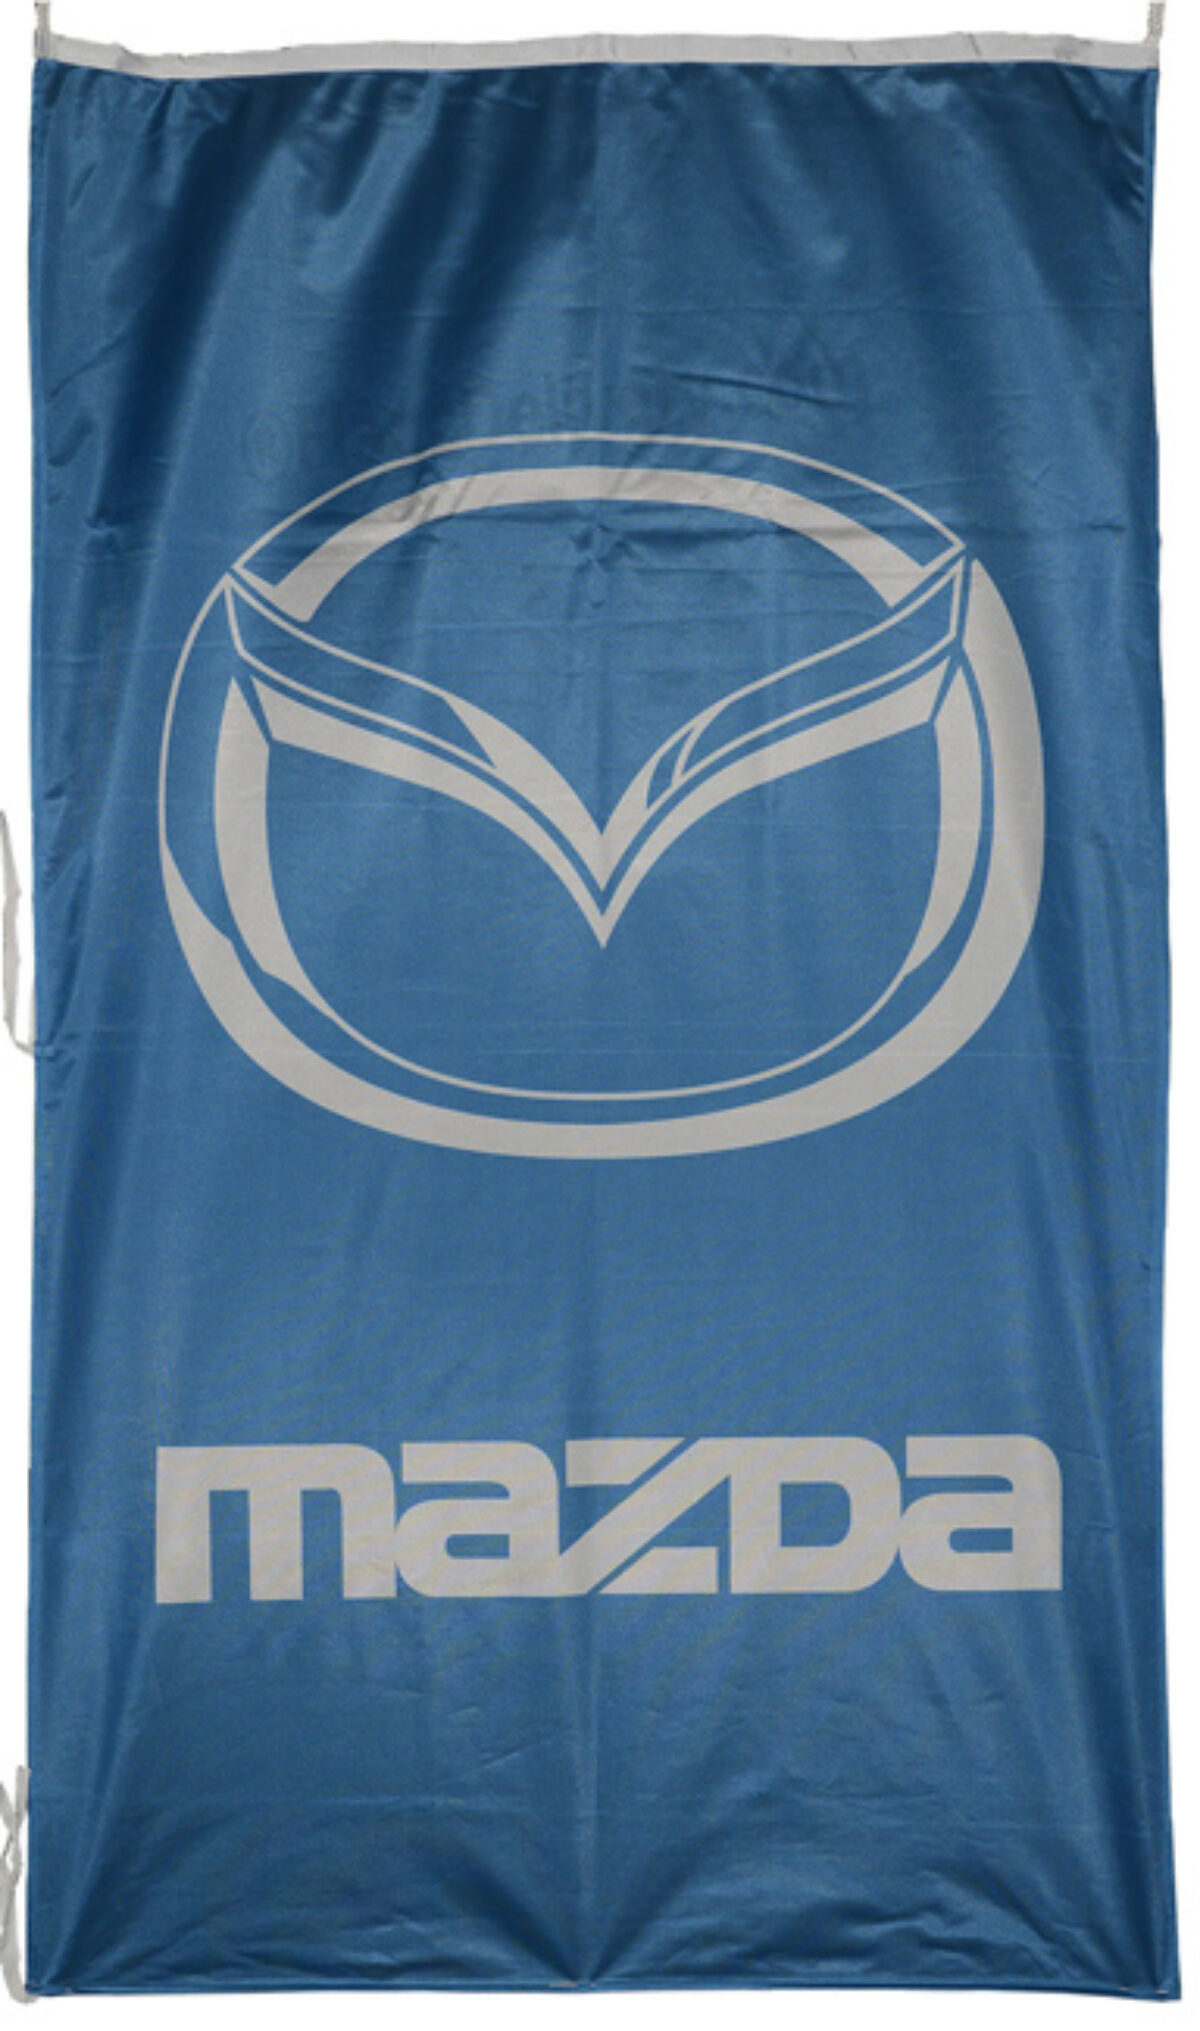 Brand New Mazda Flag Car Racing Banner Flags 3ft x 5ft 90cmX150cm White